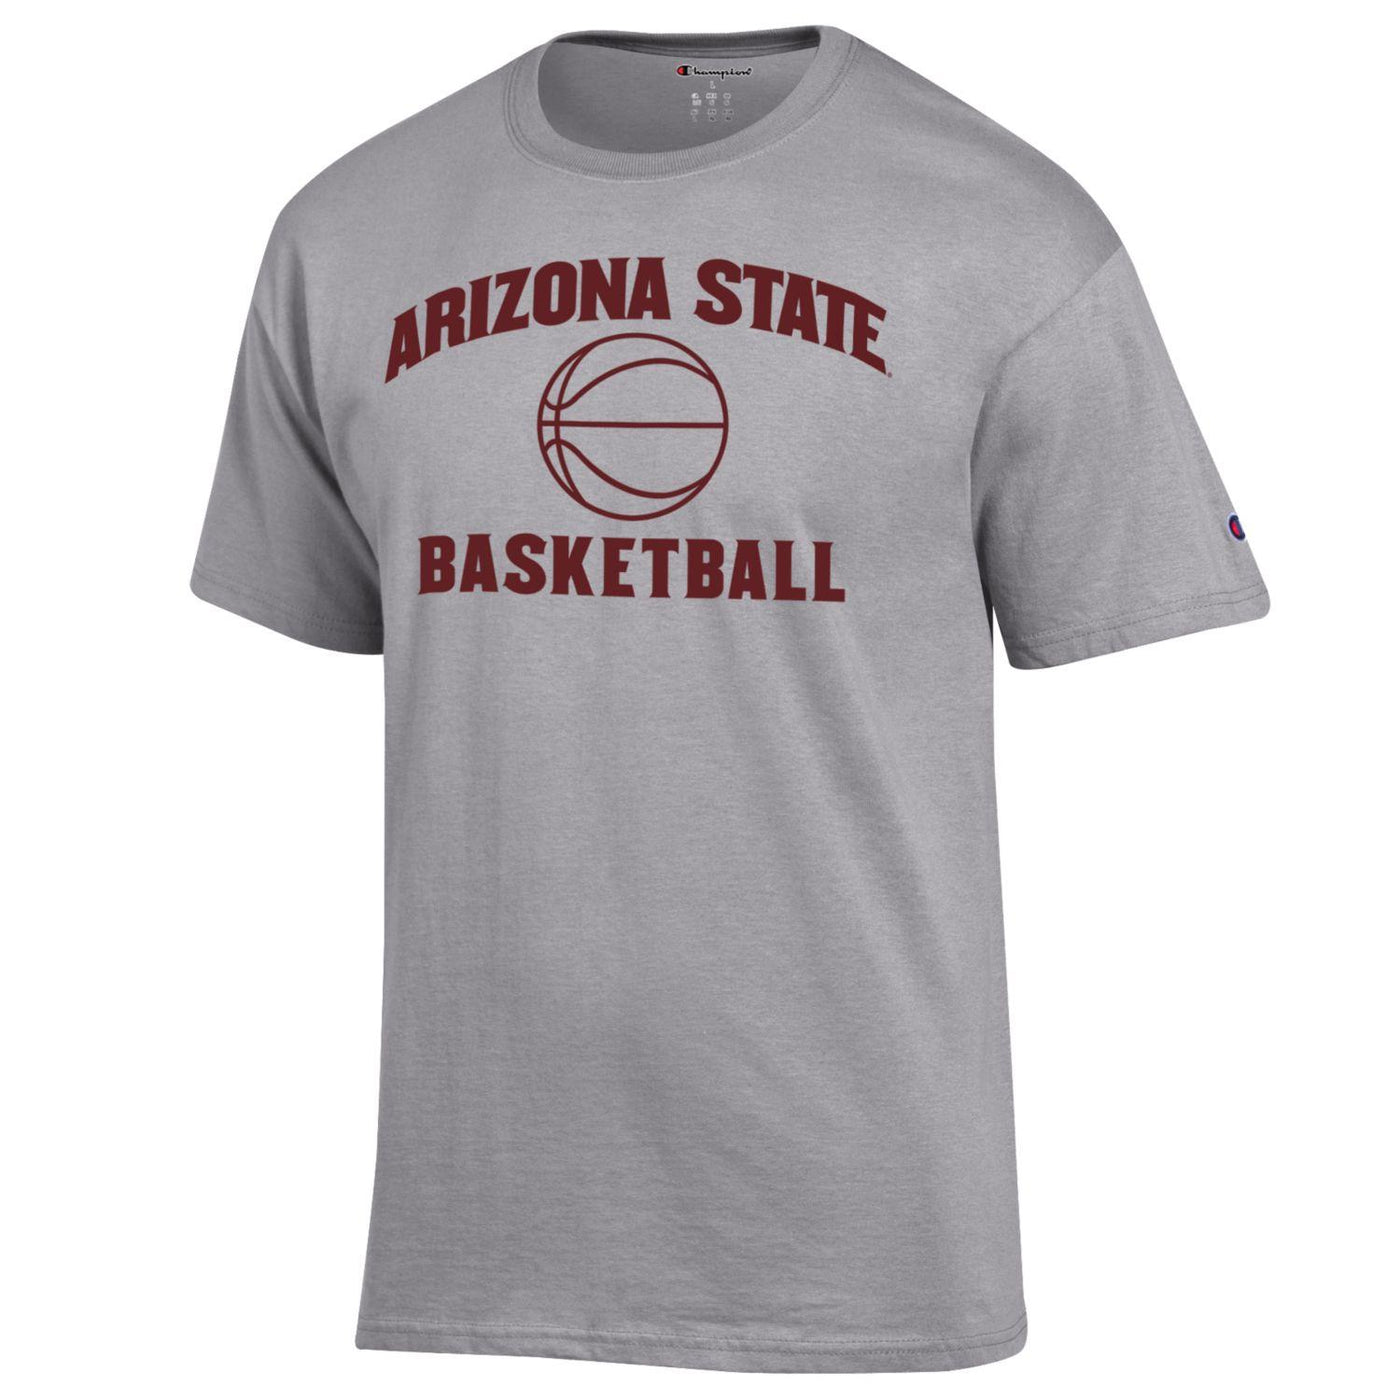 ASU gray tee with 'Arizona State Basketball' lettering and a basketball 